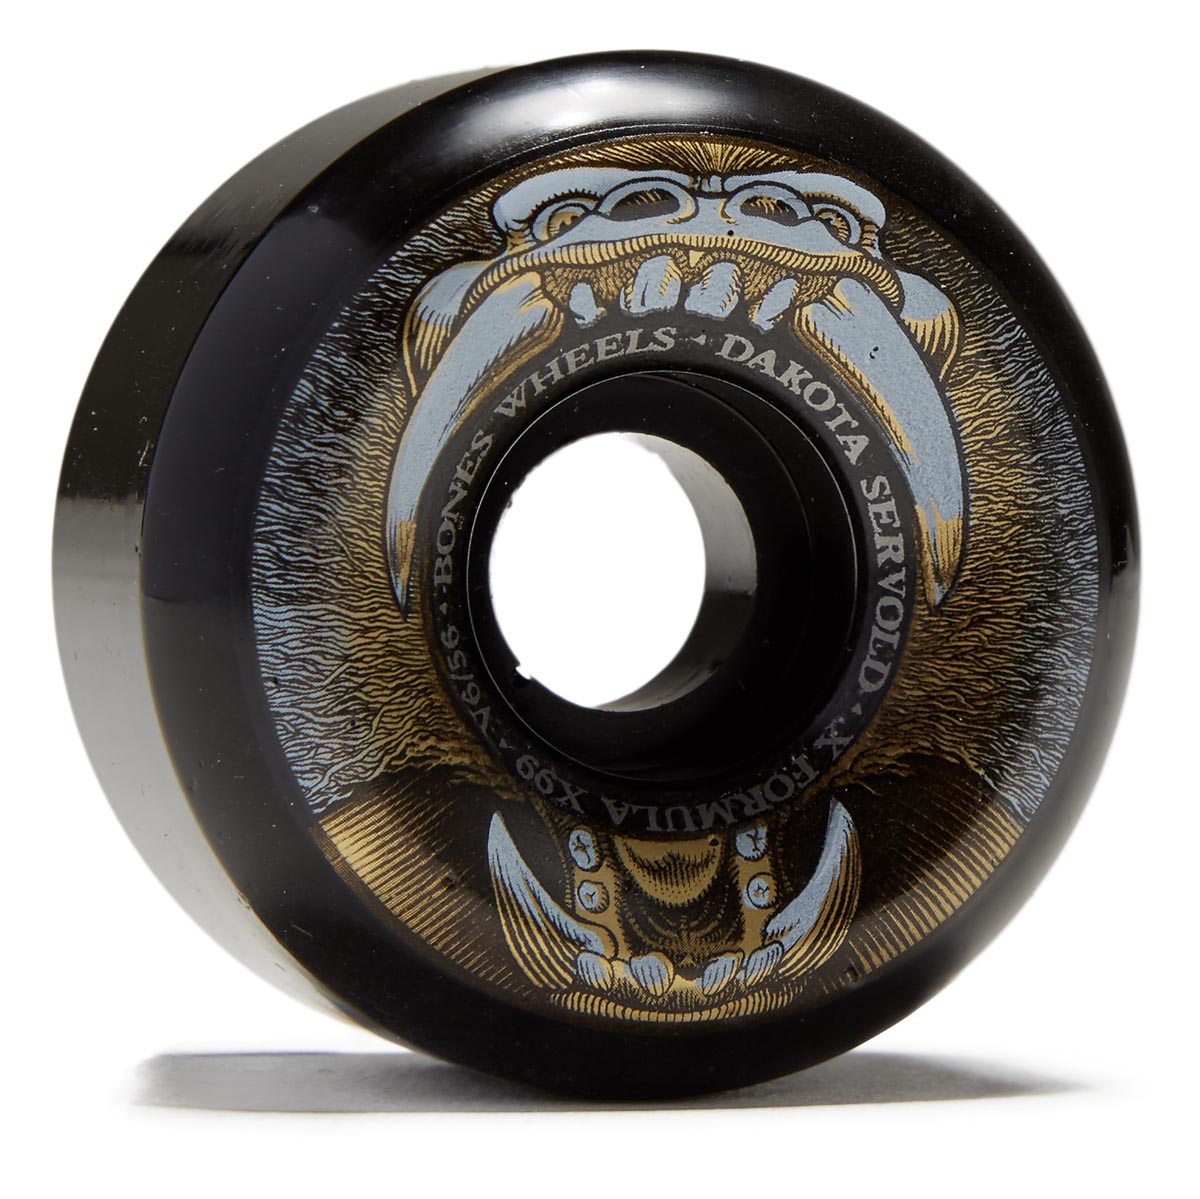 Bones X-Formula Dakota Servold Baboonatic 99a V6 Widecut Skateboard Wheels - Black - 56mm image 1